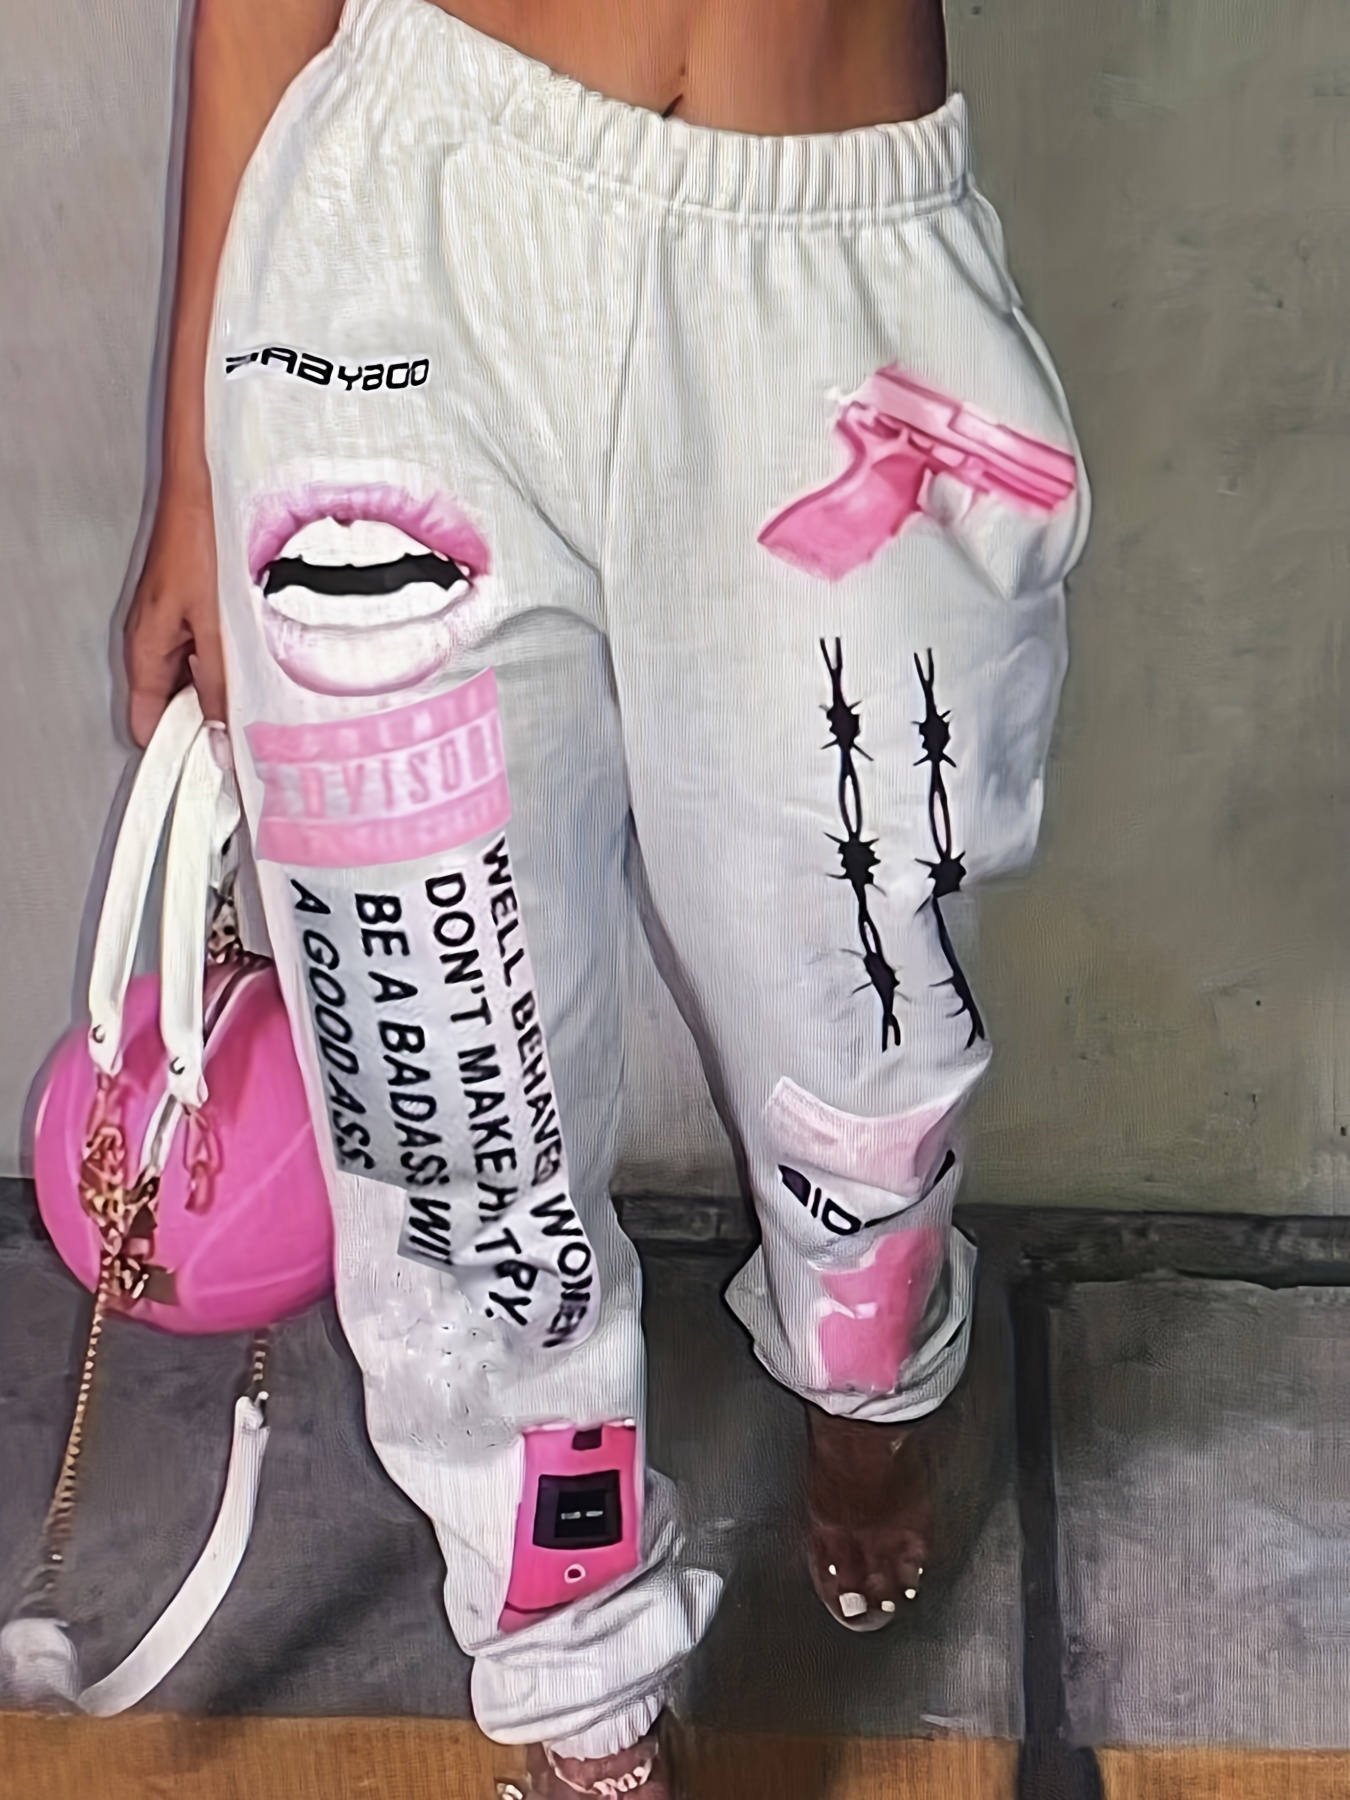 Womens Pink Sweatpants Pants - Bottoms, Clothing